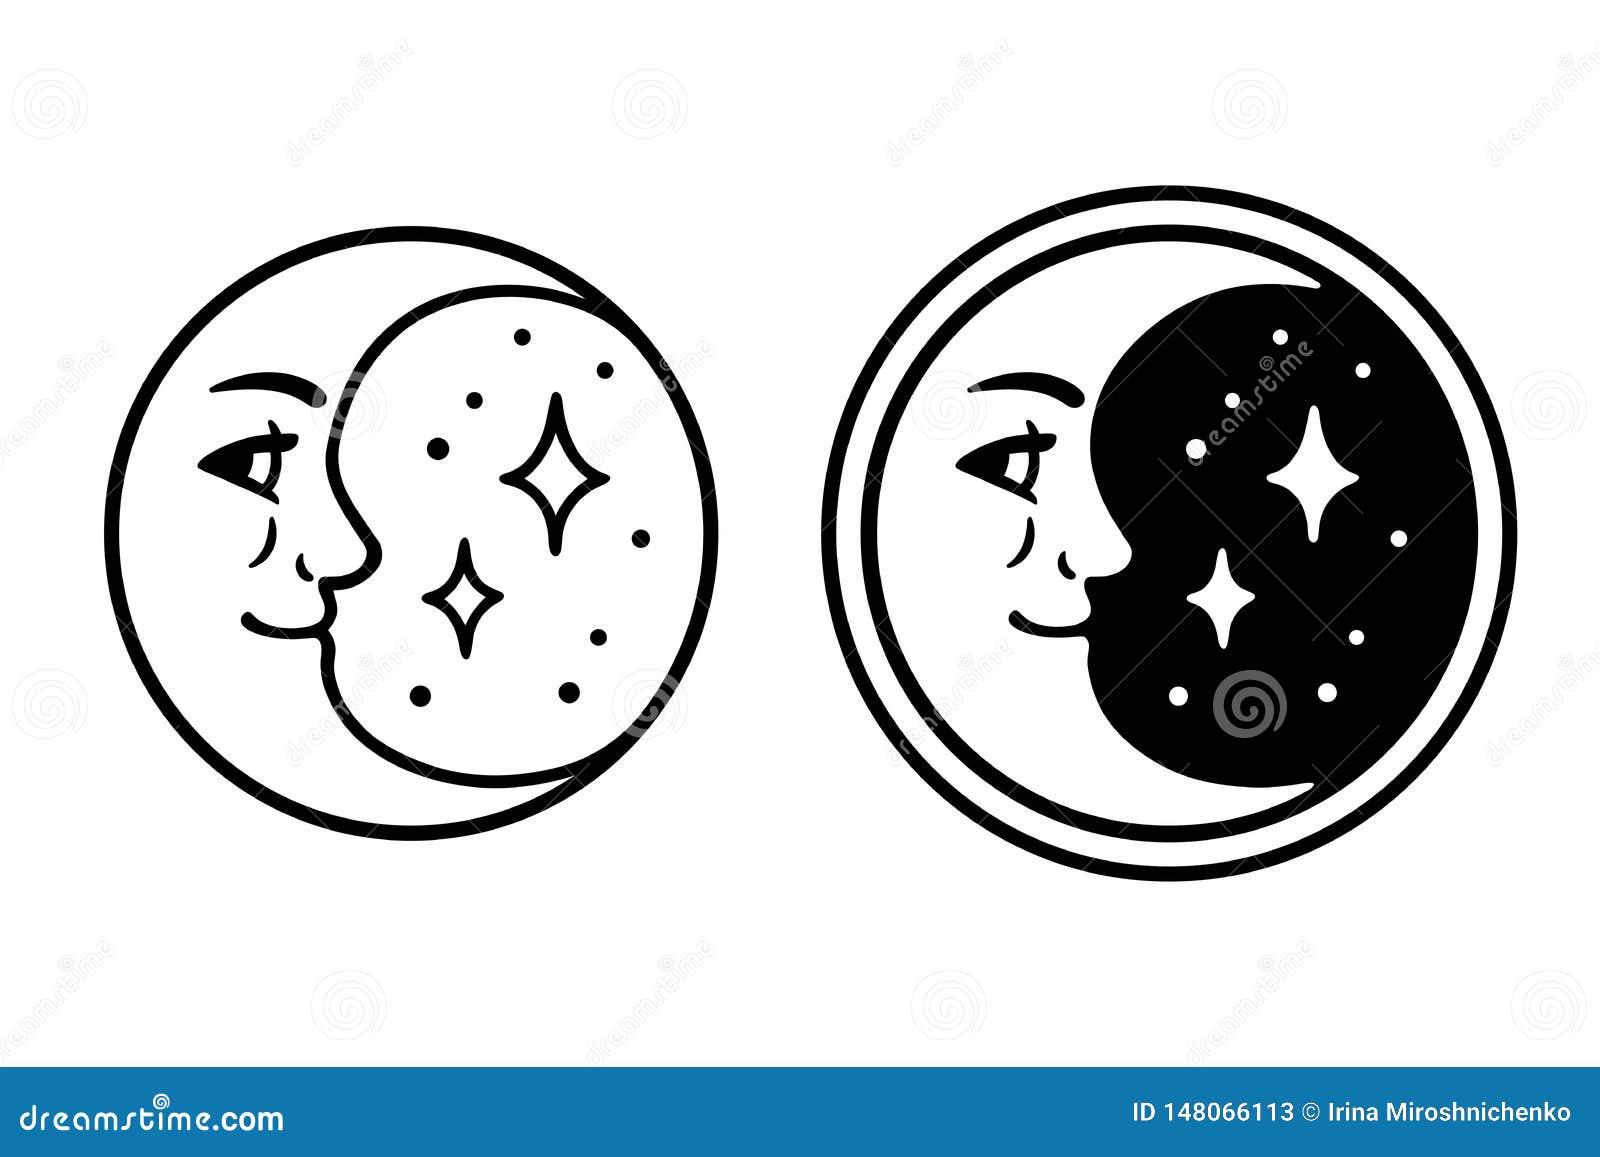 crescent moon face